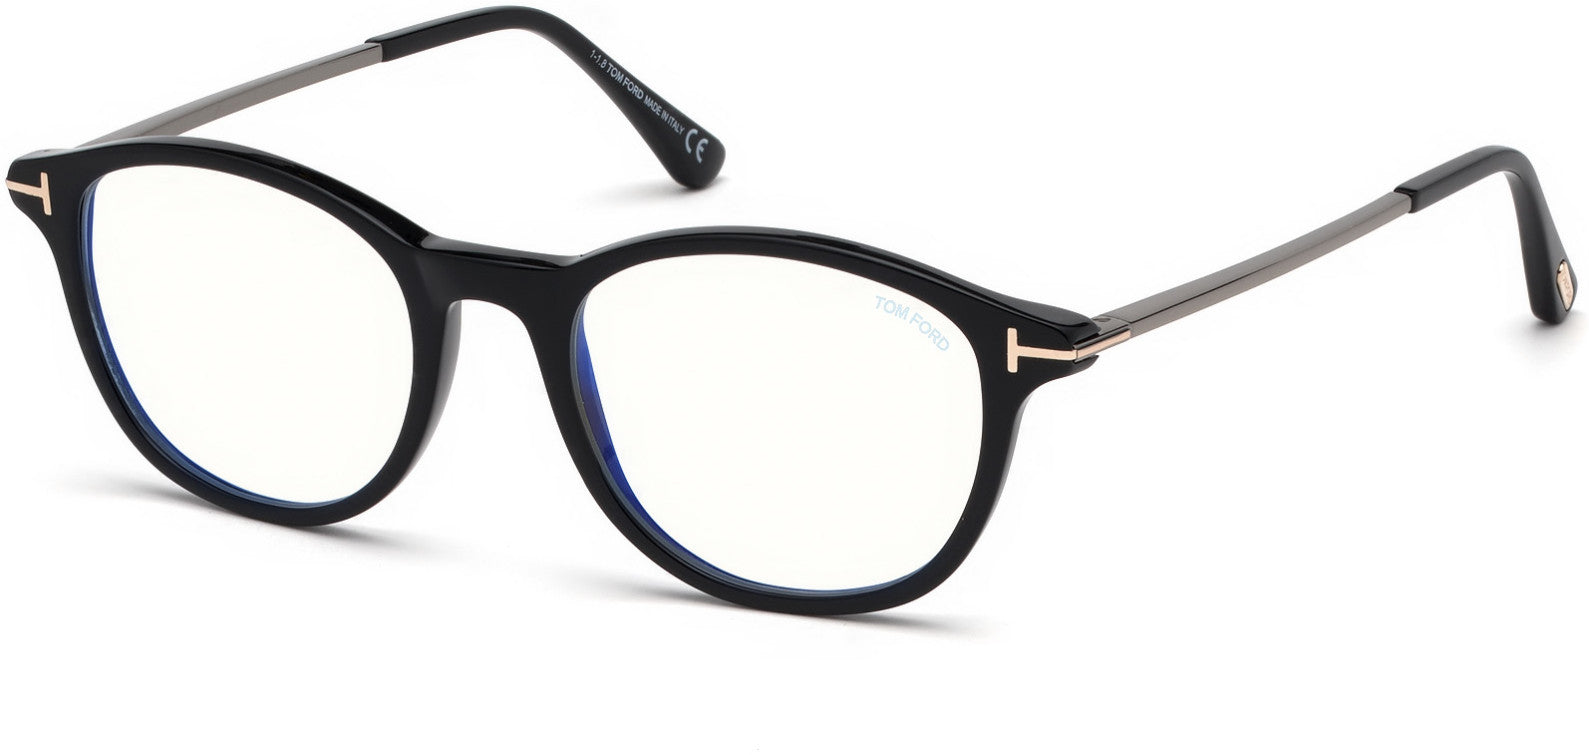 Tom Ford FT5553-F-B Round Eyeglasses 001-001 - Shiny Black, Shiny Dark Ruthenium/ Blue Block Lenses